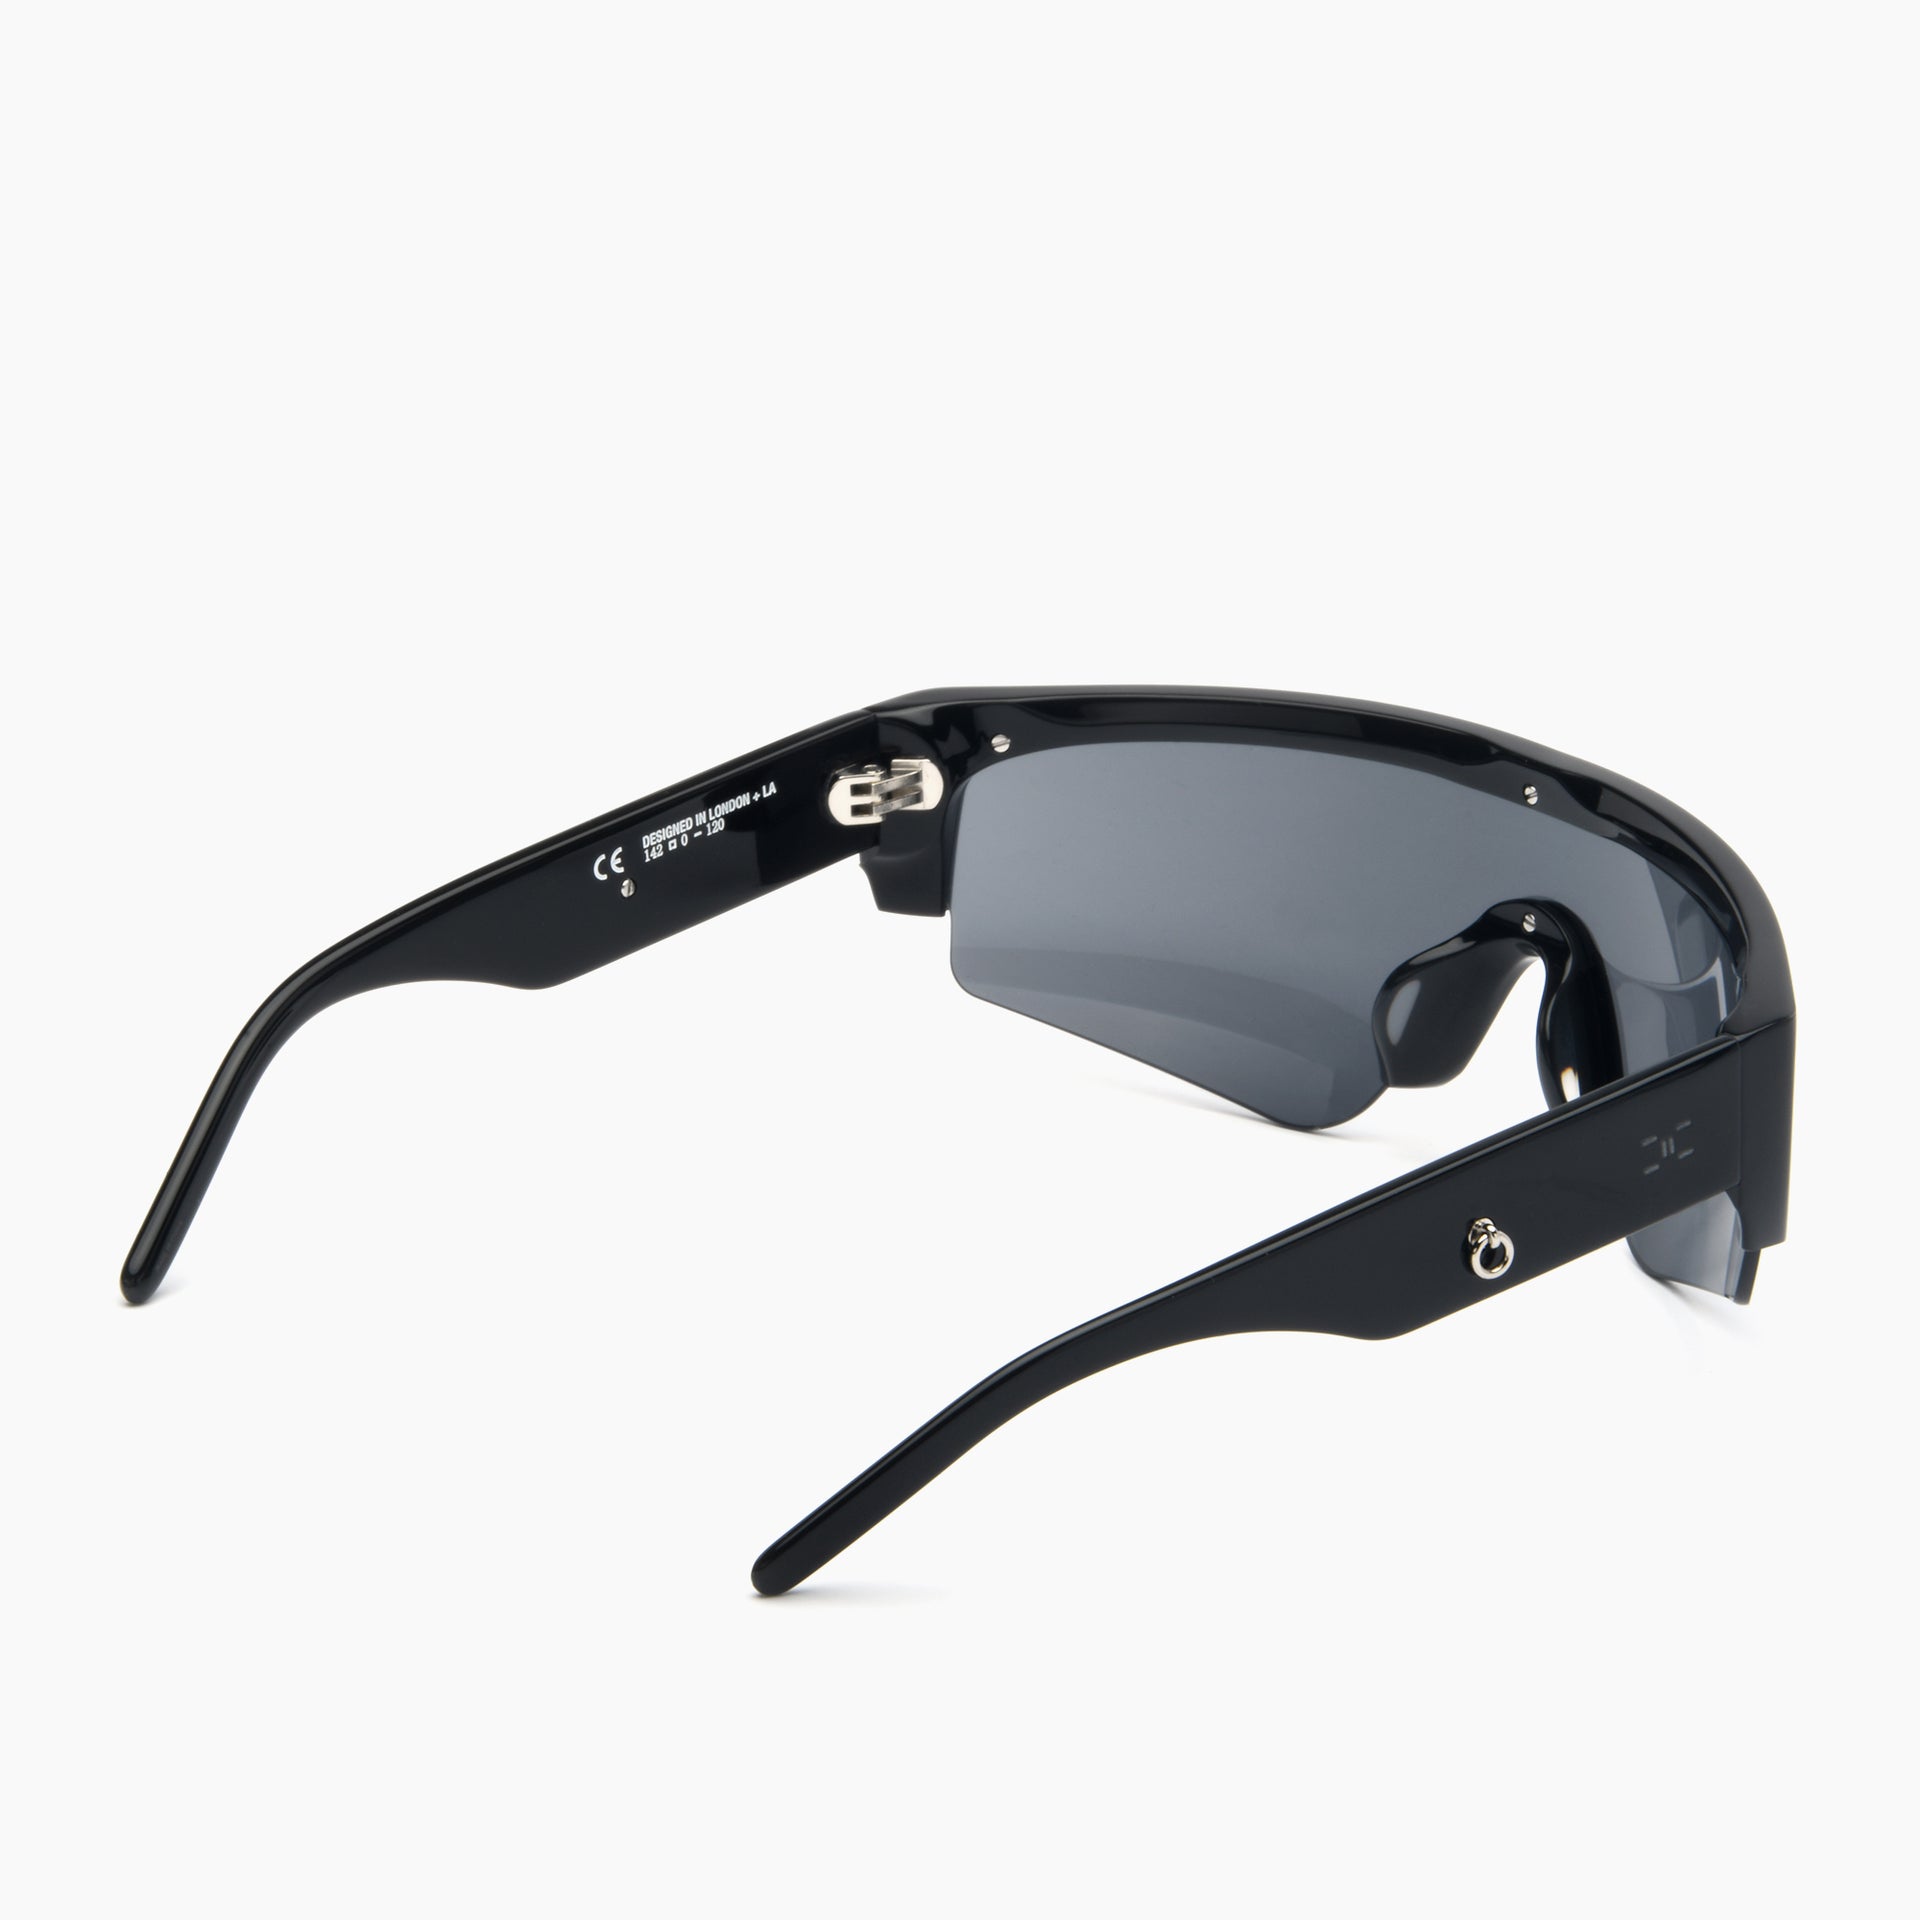 Halo x Charli Cohen Sunglasses - Black/Black